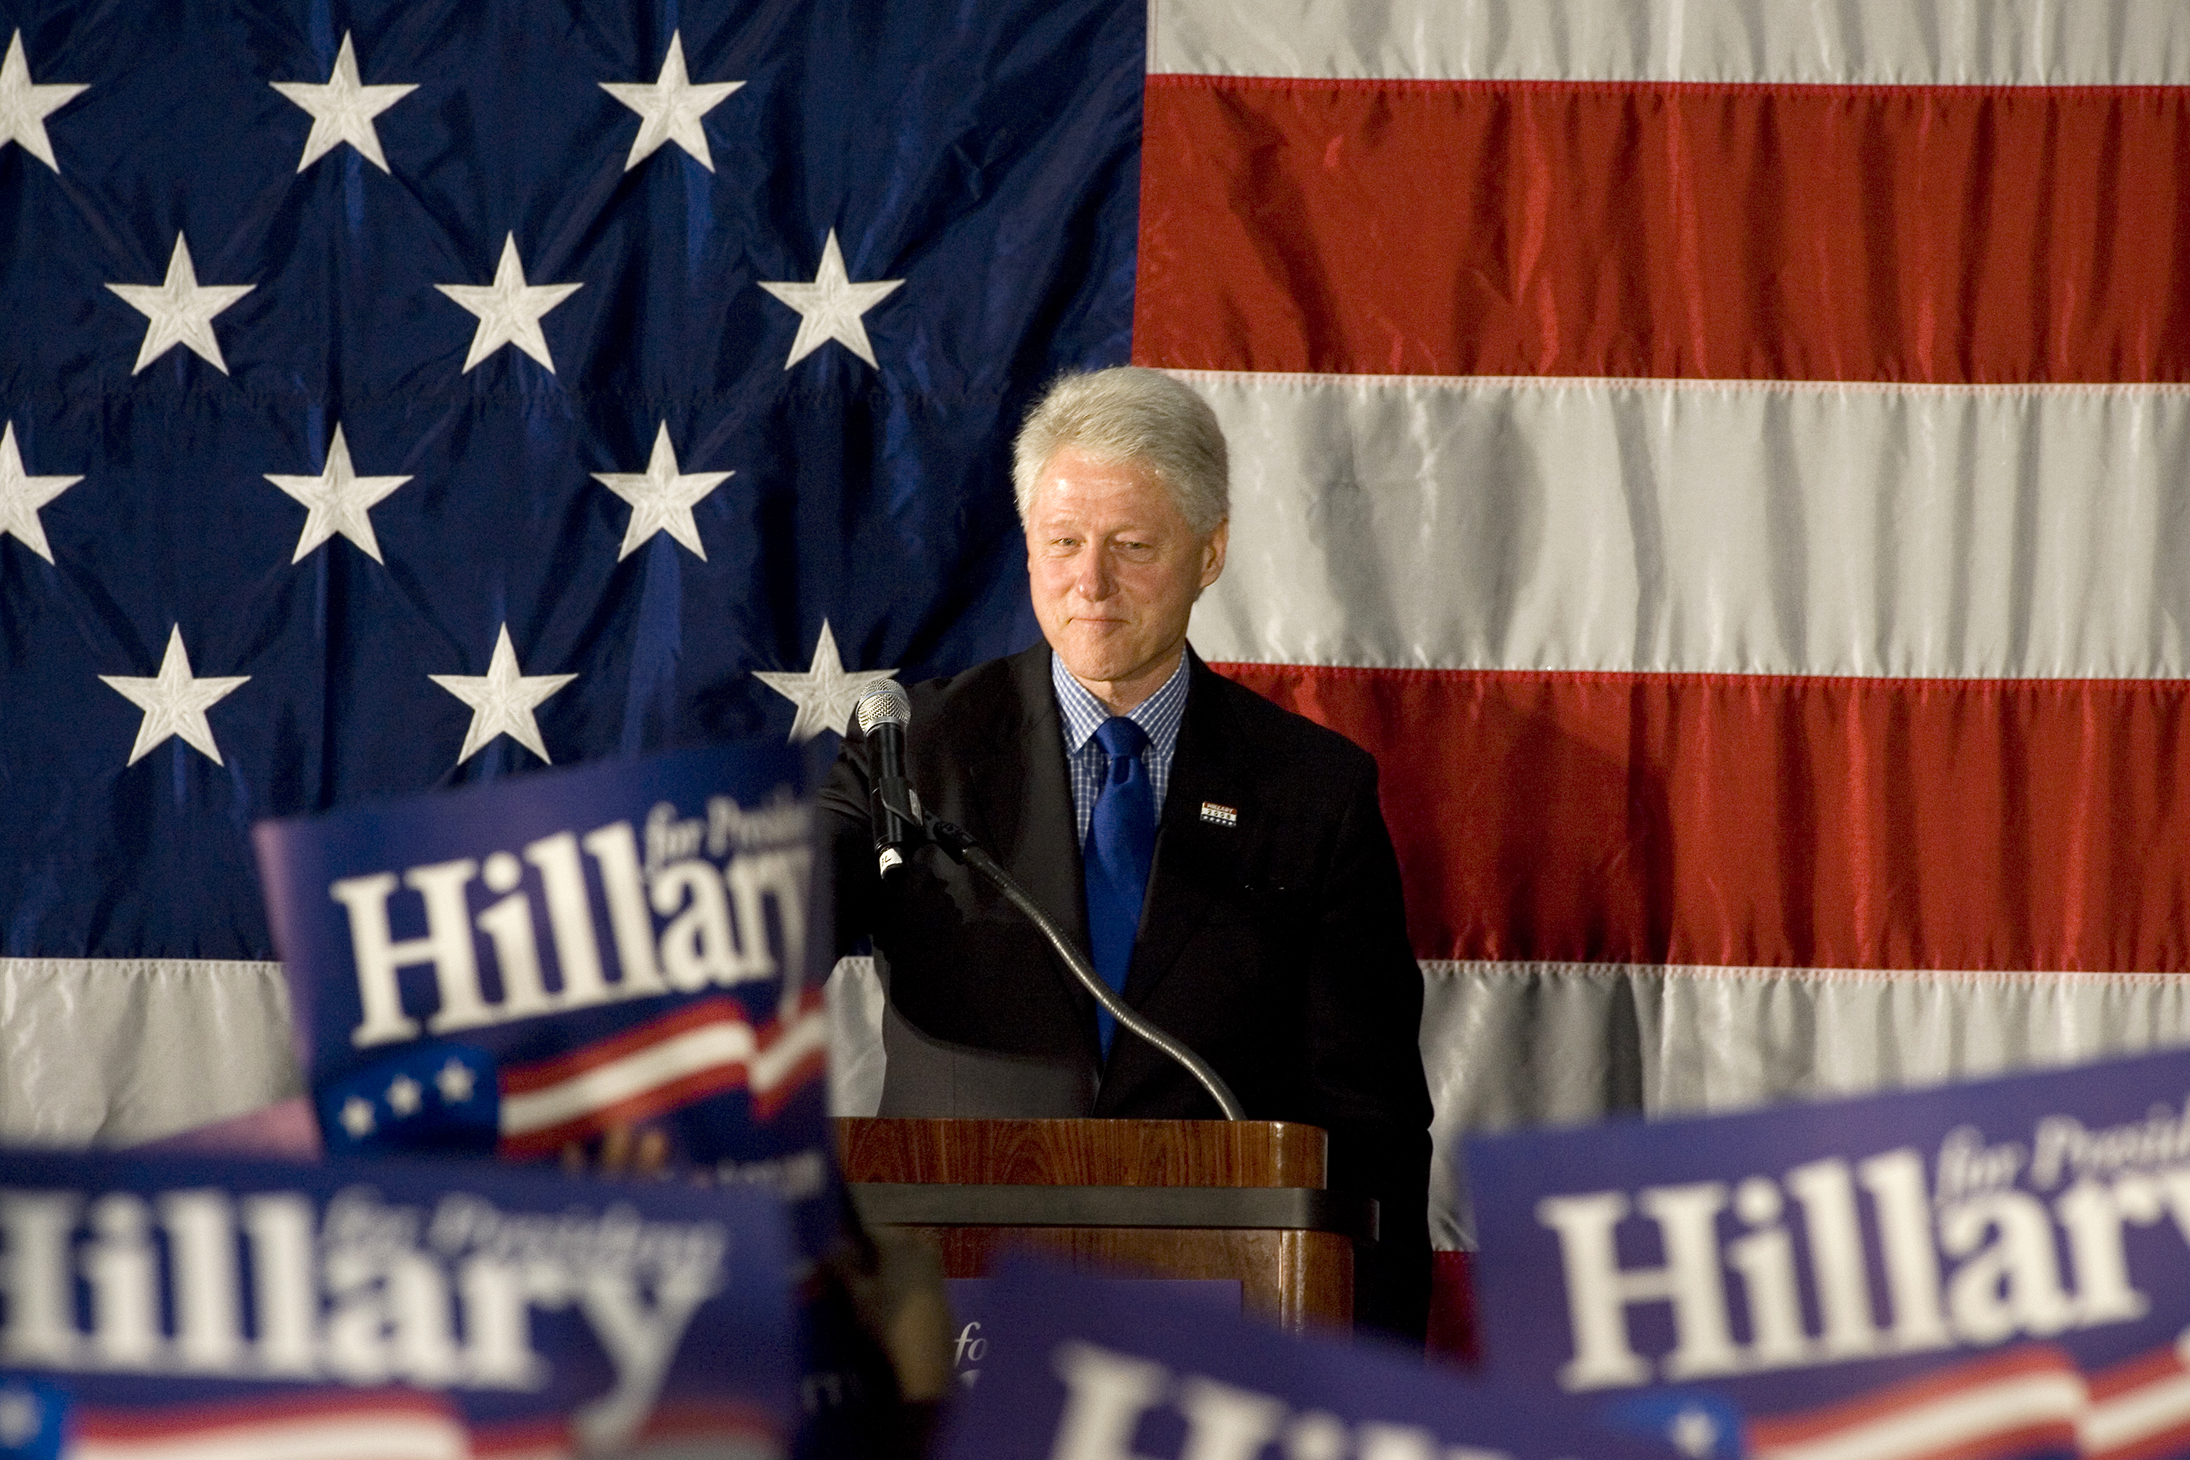 Bill Clinton campaigns for Hillary Clinton in 2008.